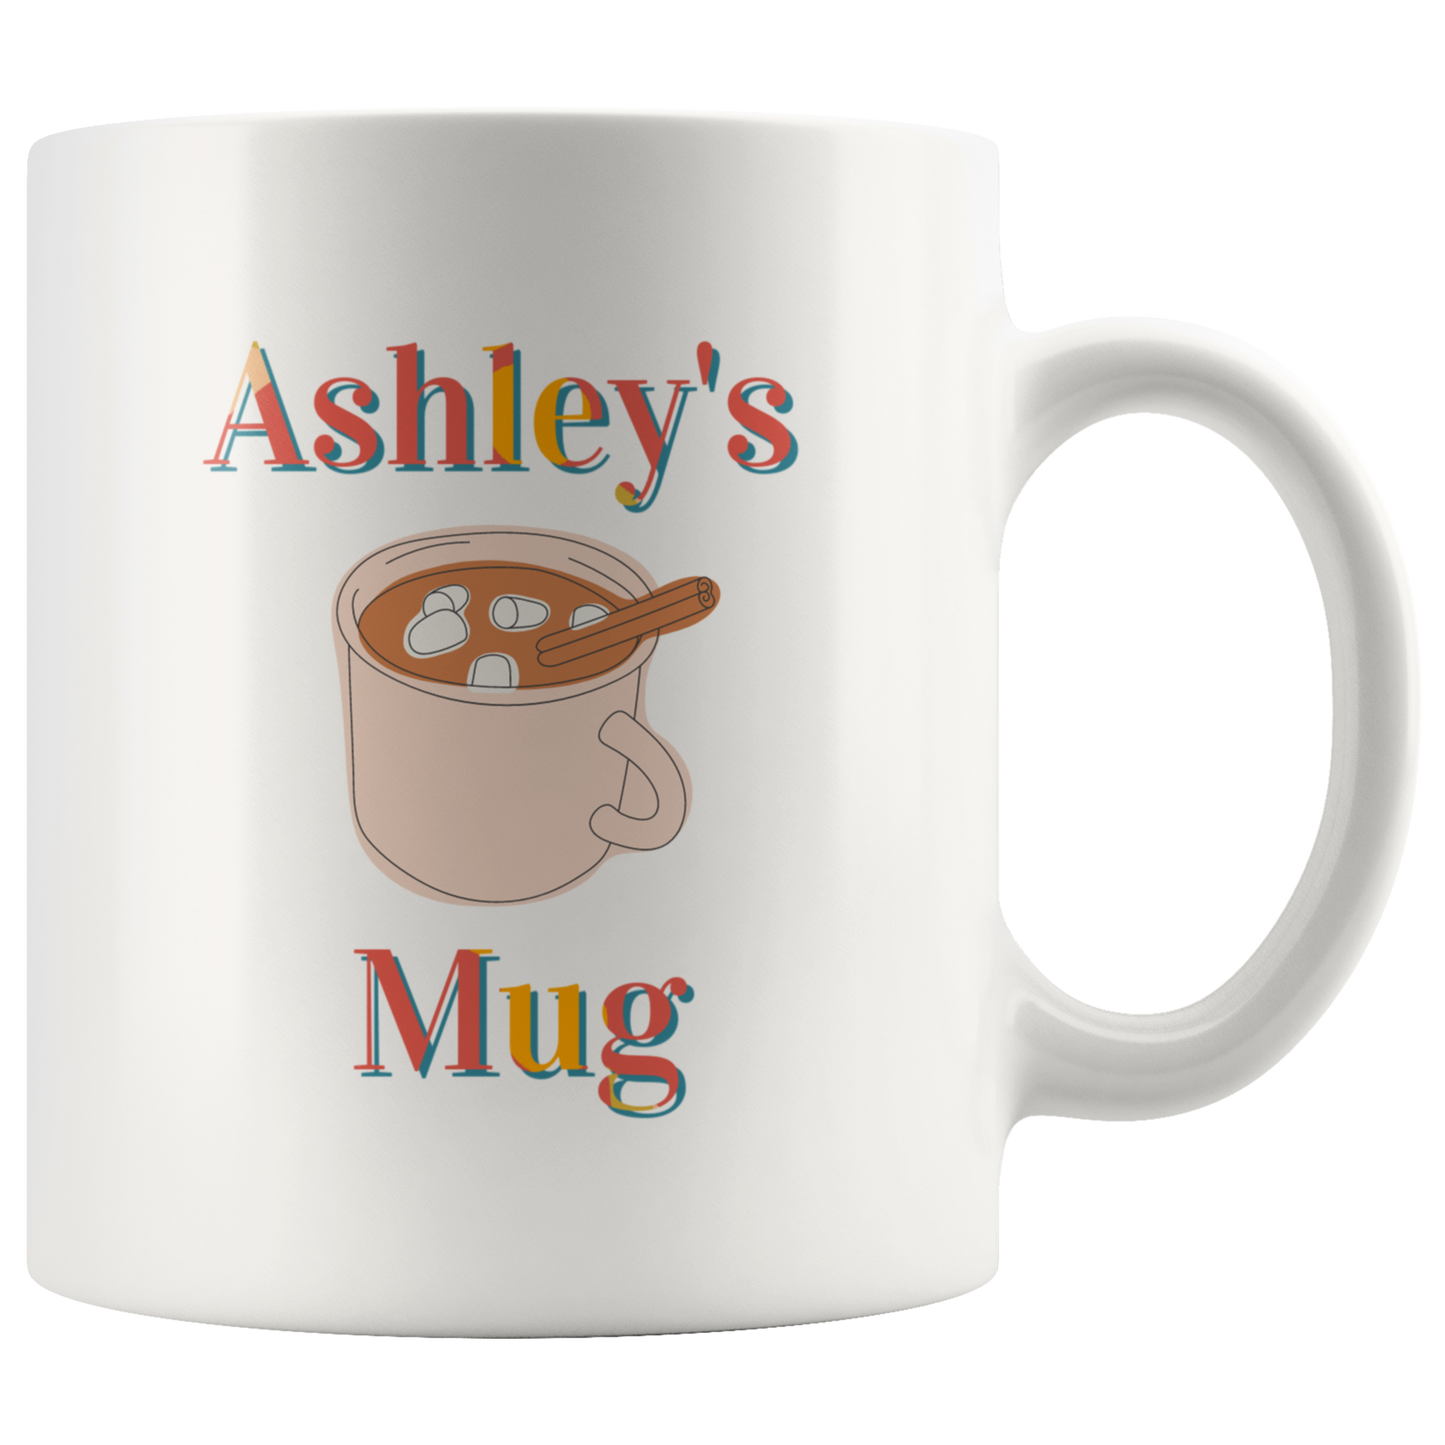 Kids Gift Cocoa Mug, Gifts for kids, Personalized Mug, Hot Chocolate Cup, Custom Mug